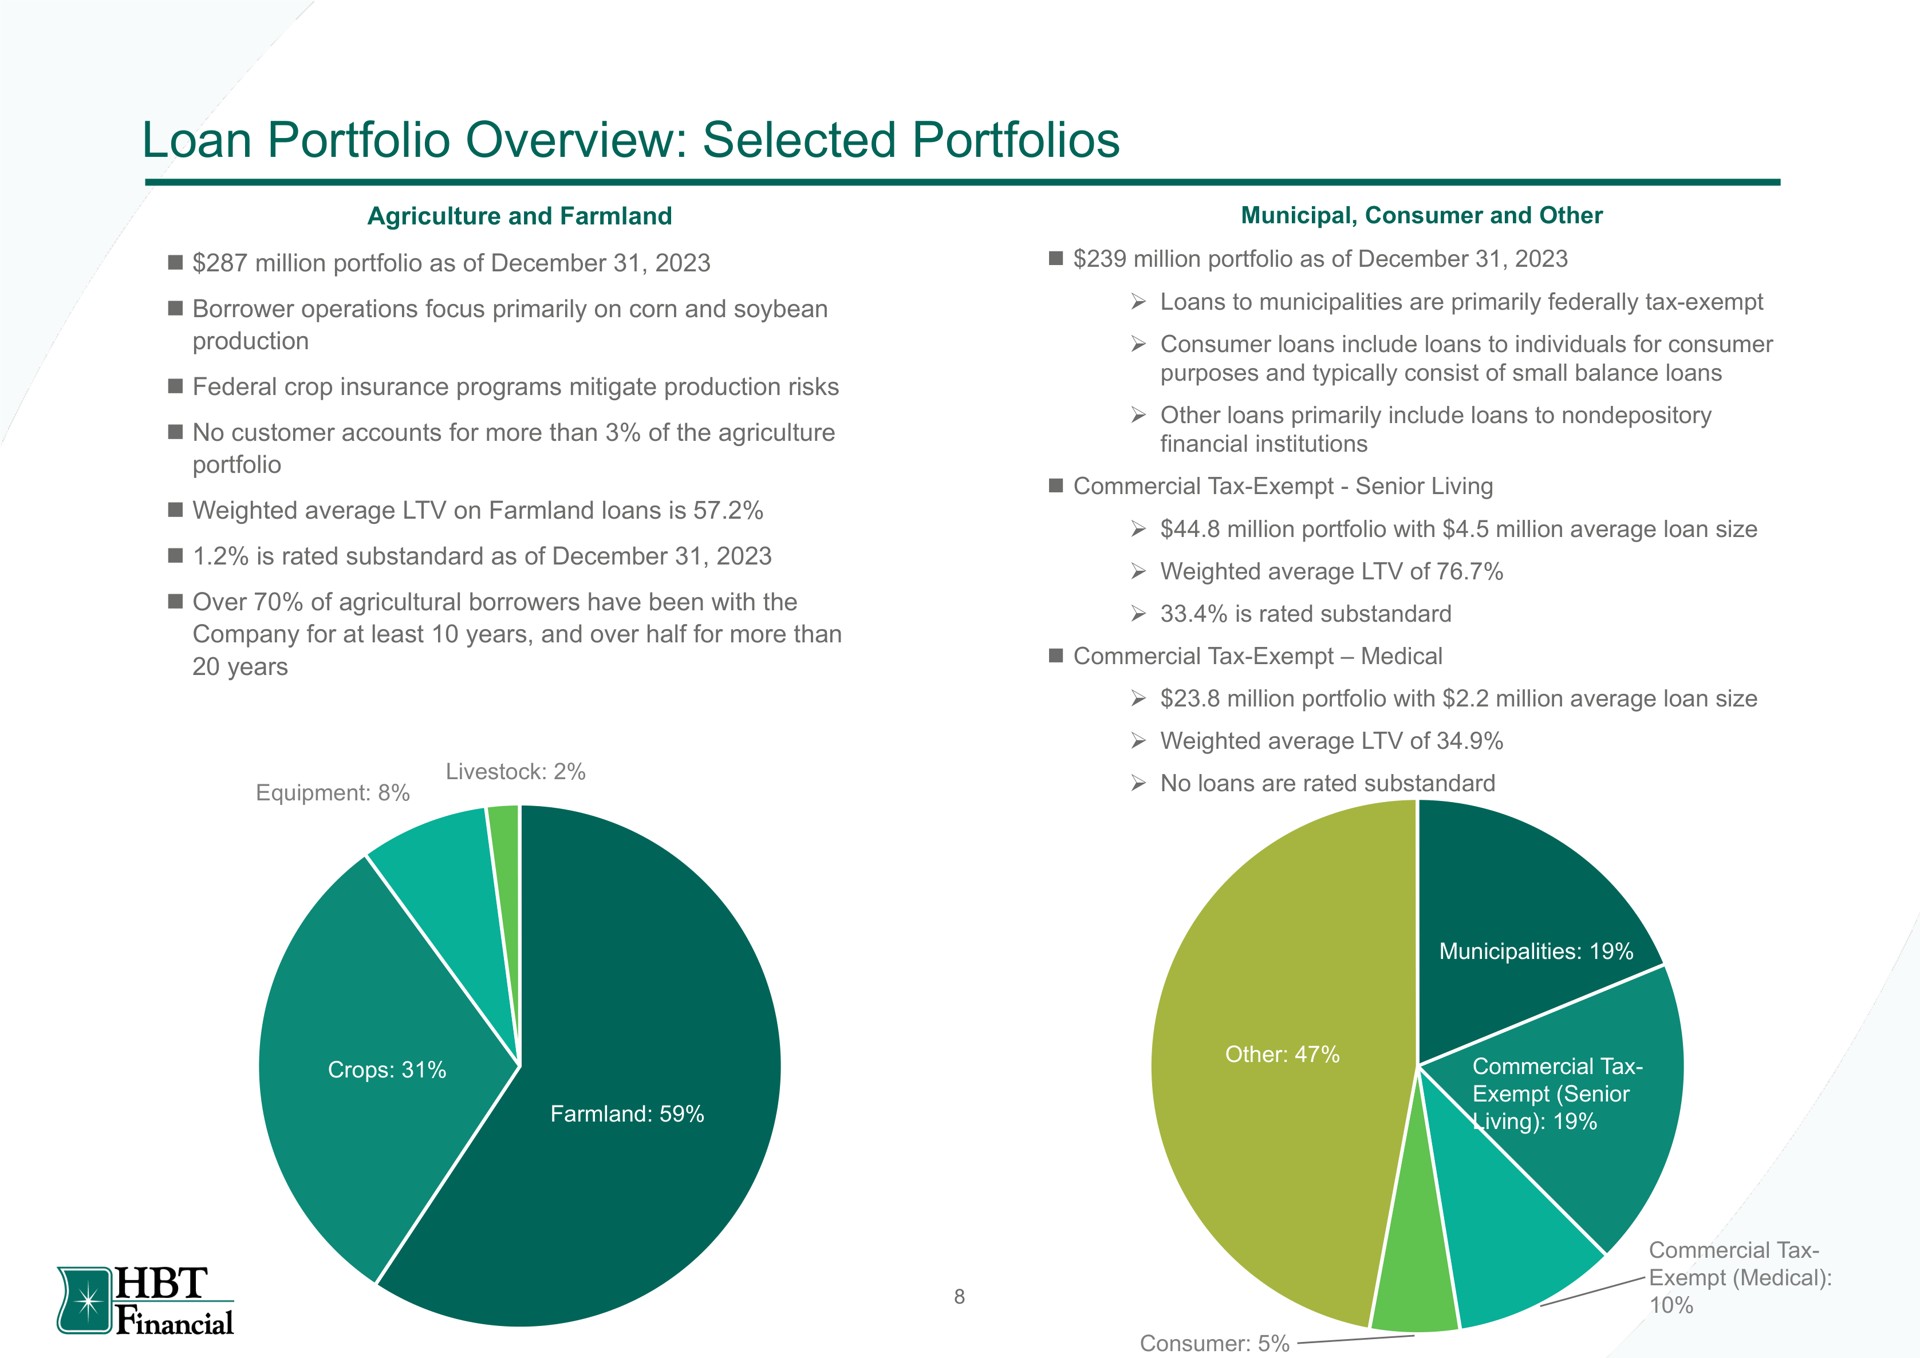 loan portfolio overview selected portfolios | HBT Financial